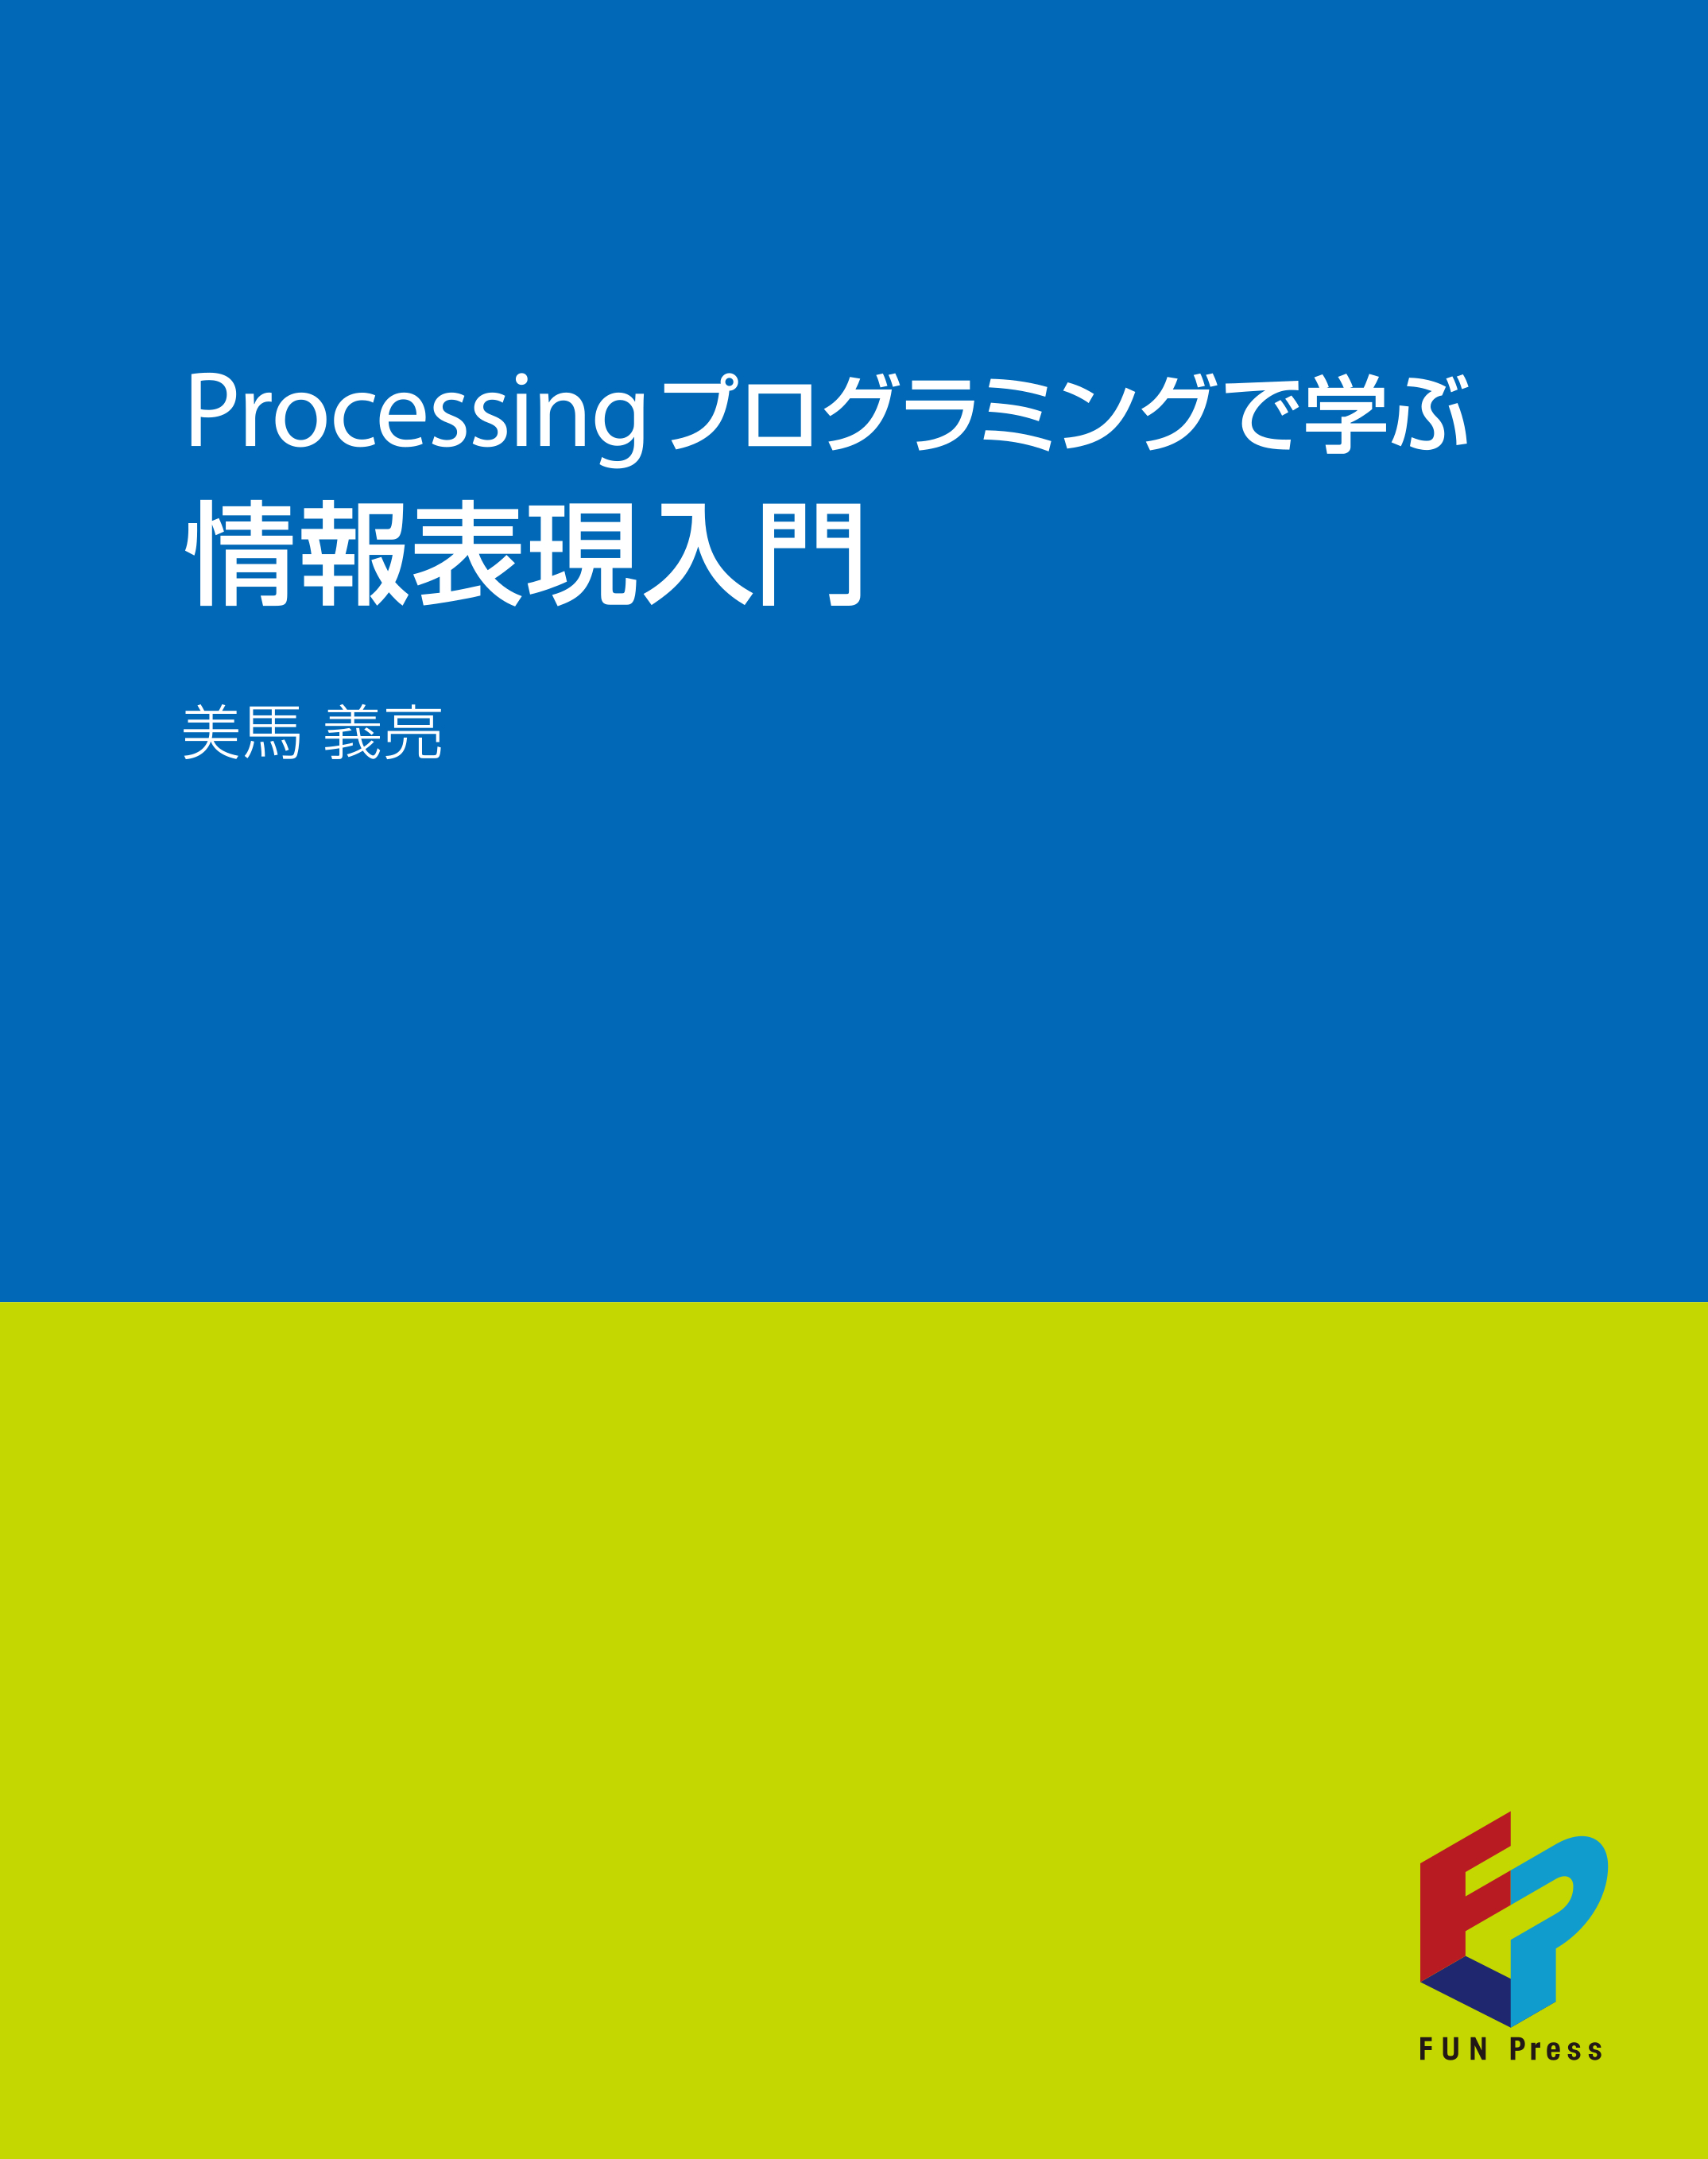 Processingプログラミングで学ぶ情報表現入門の商品画像